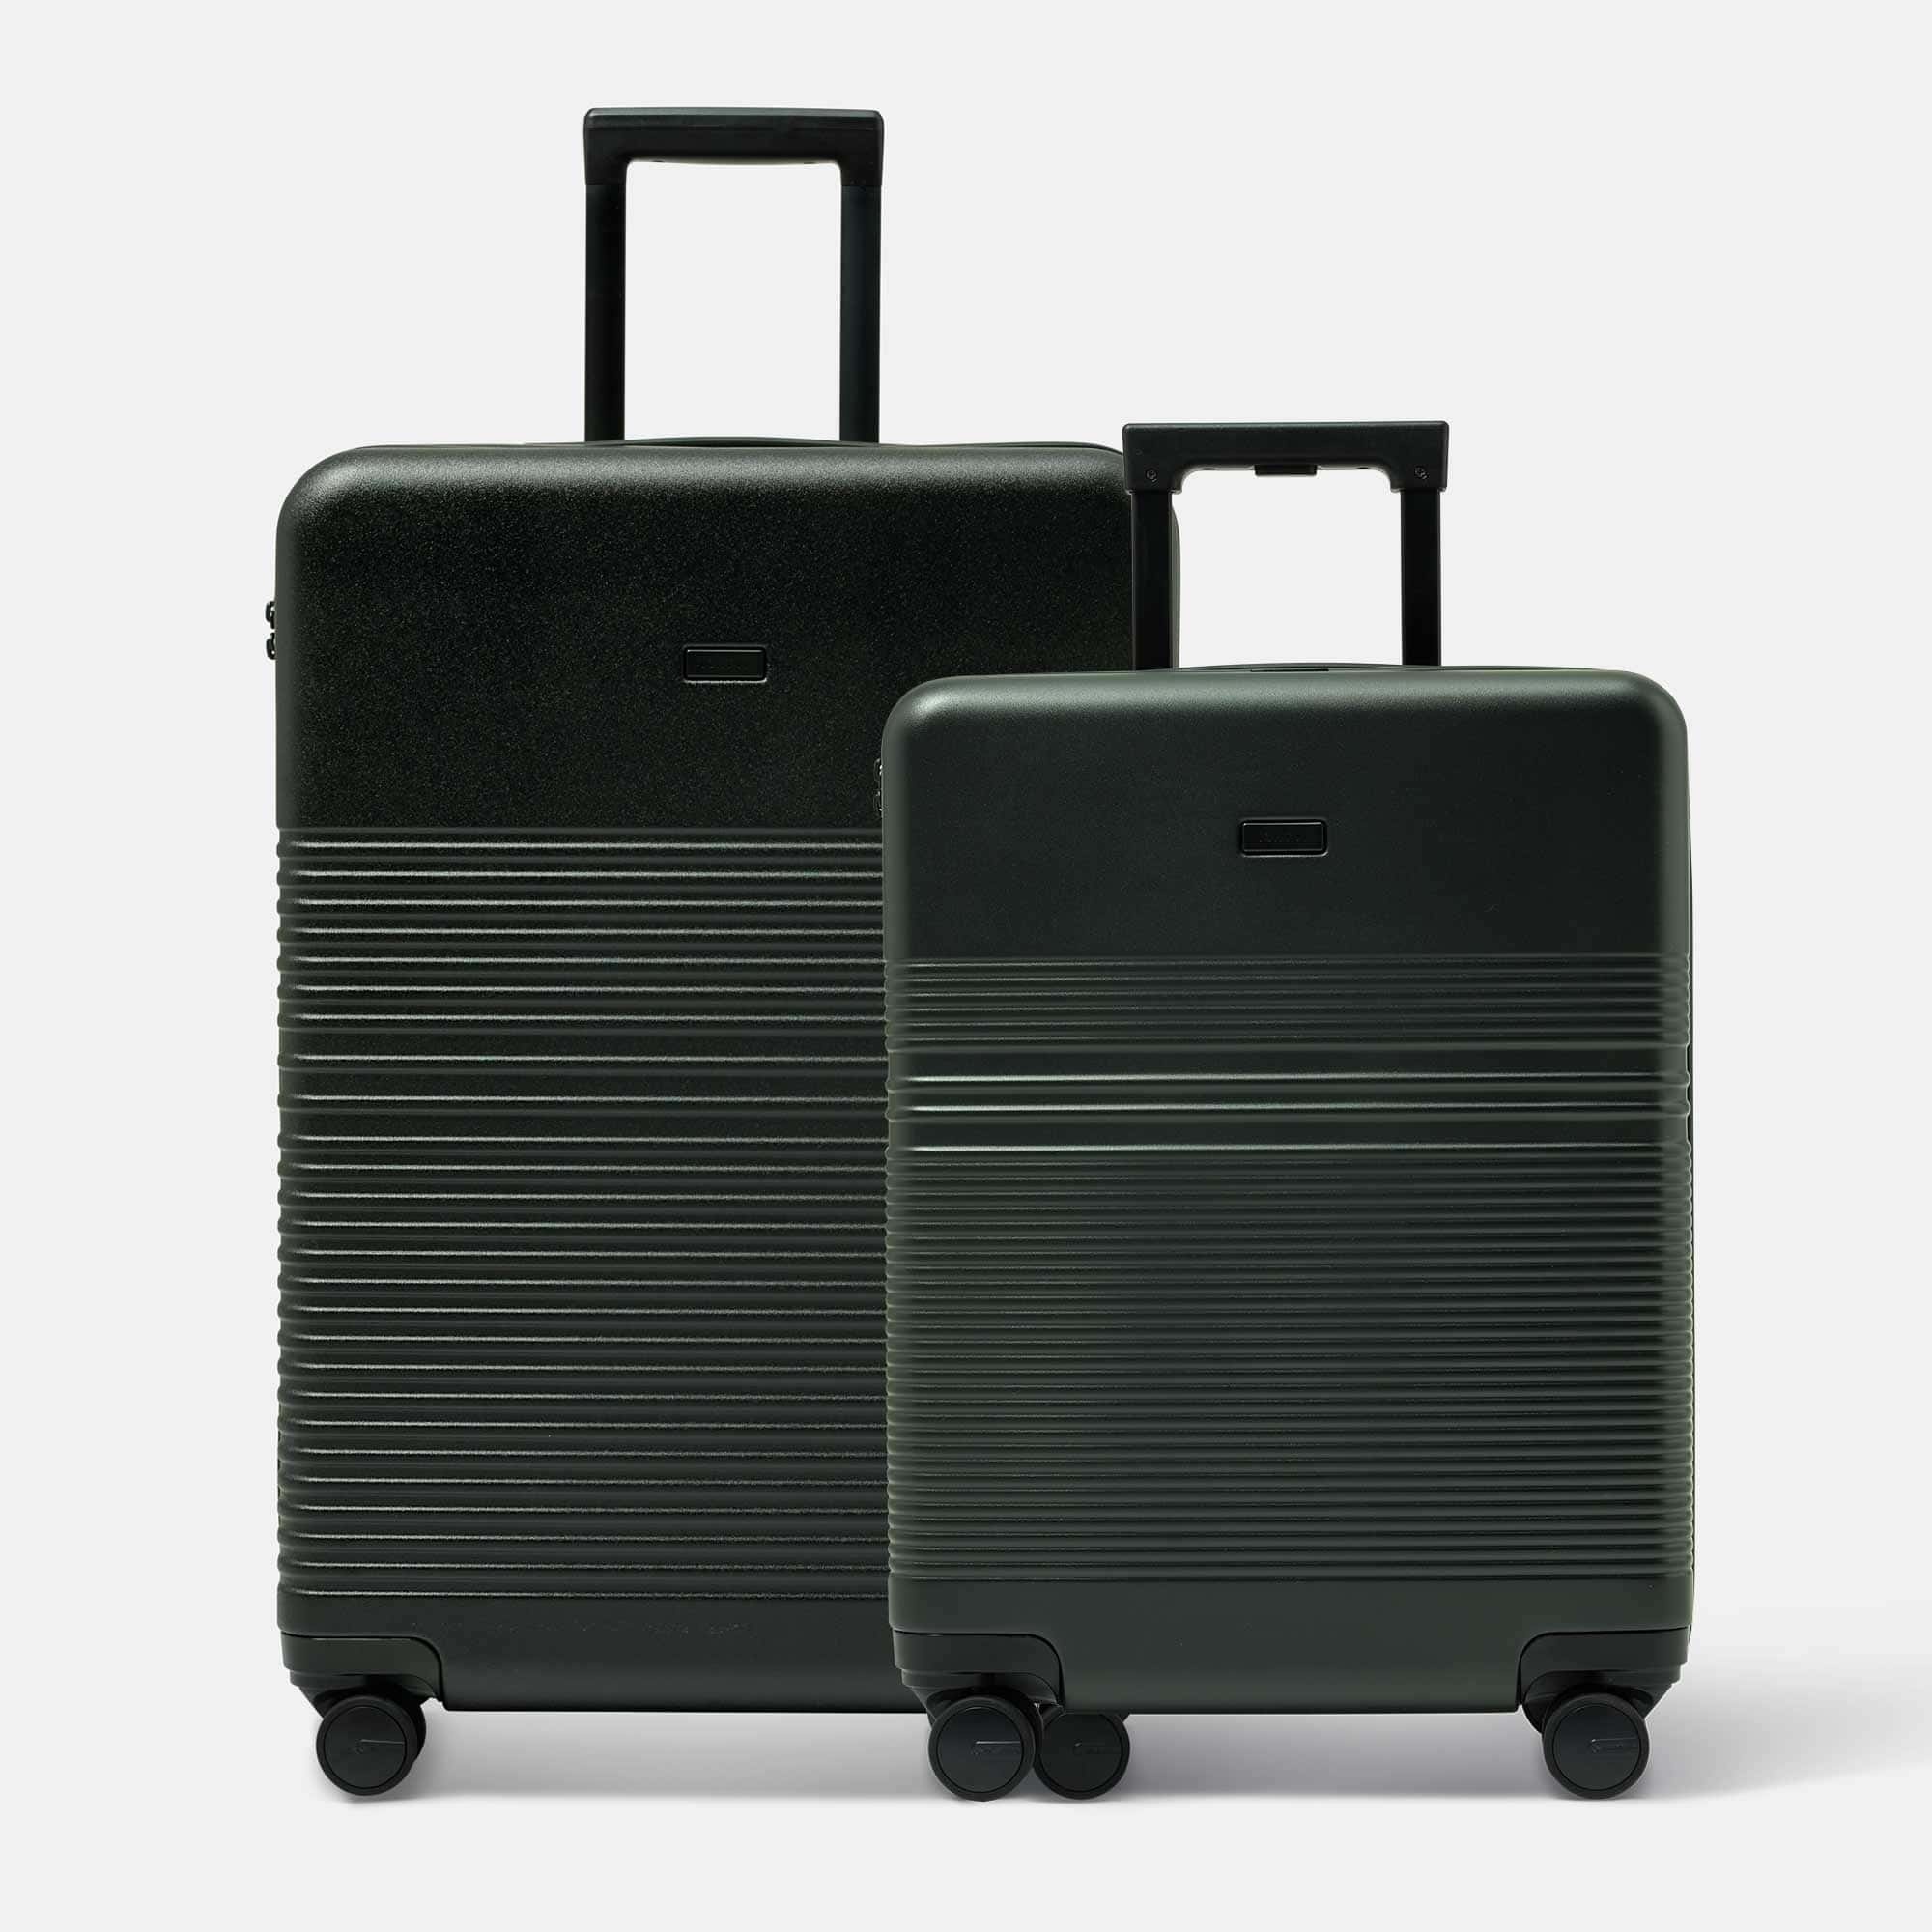 Nortvi suitcase travel set